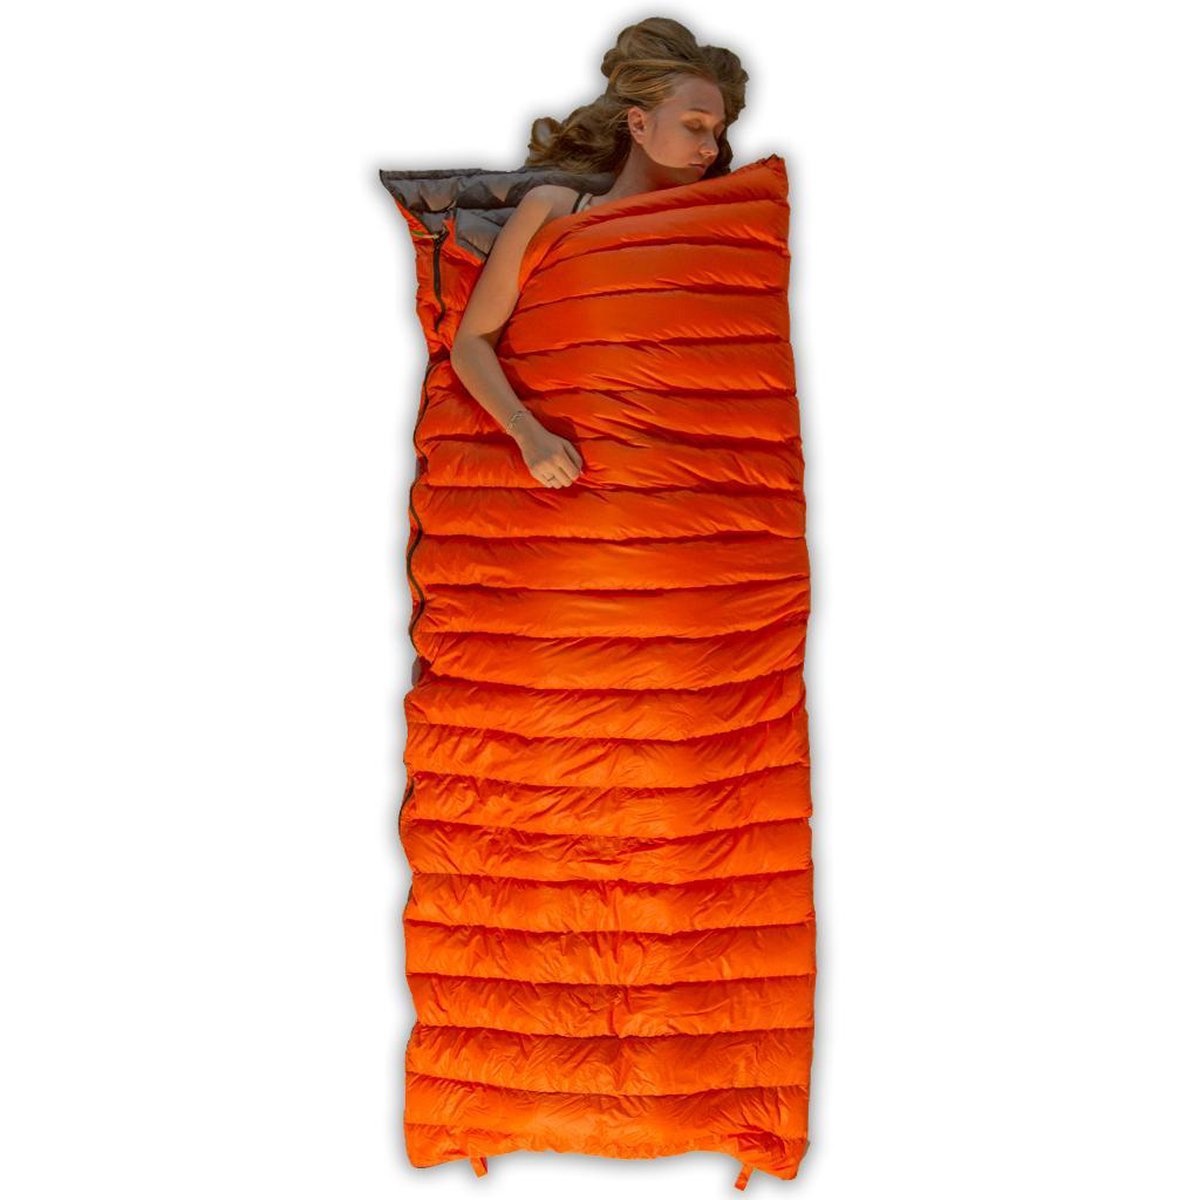 LOWLAND OUTDOOR® Super compact blanket 590g +8°C - Sleeping Bags